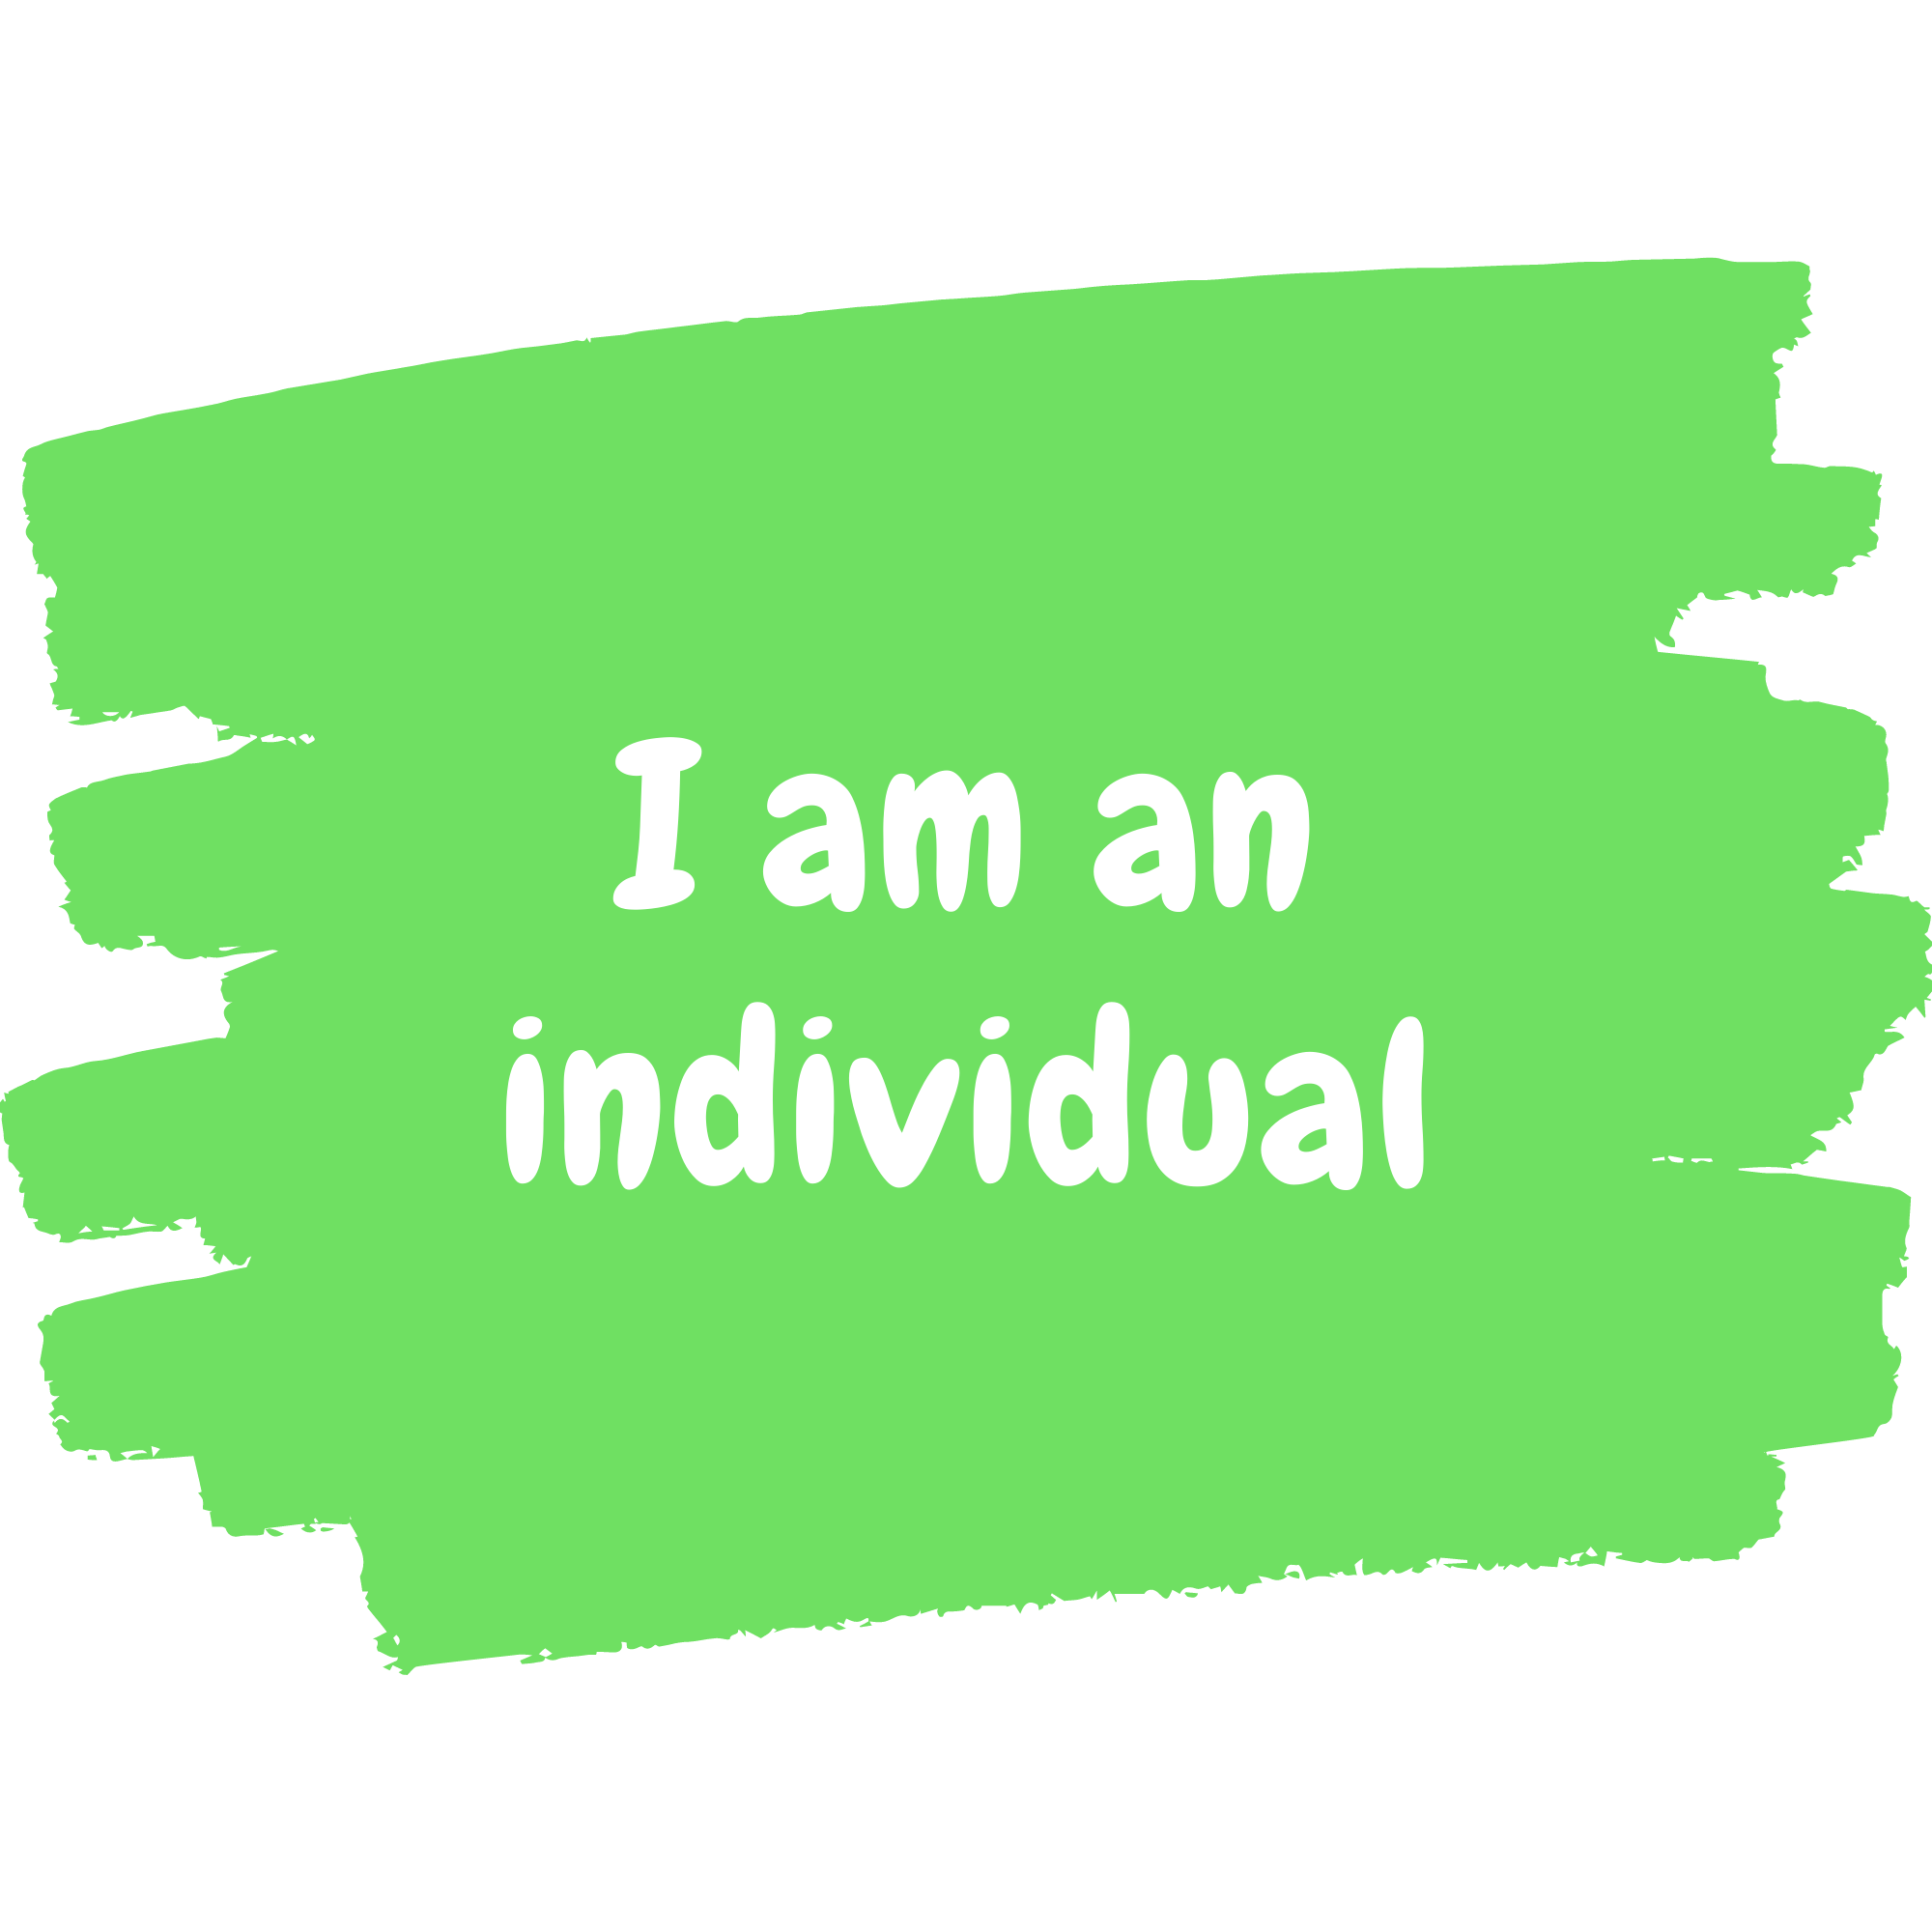 I am an individual